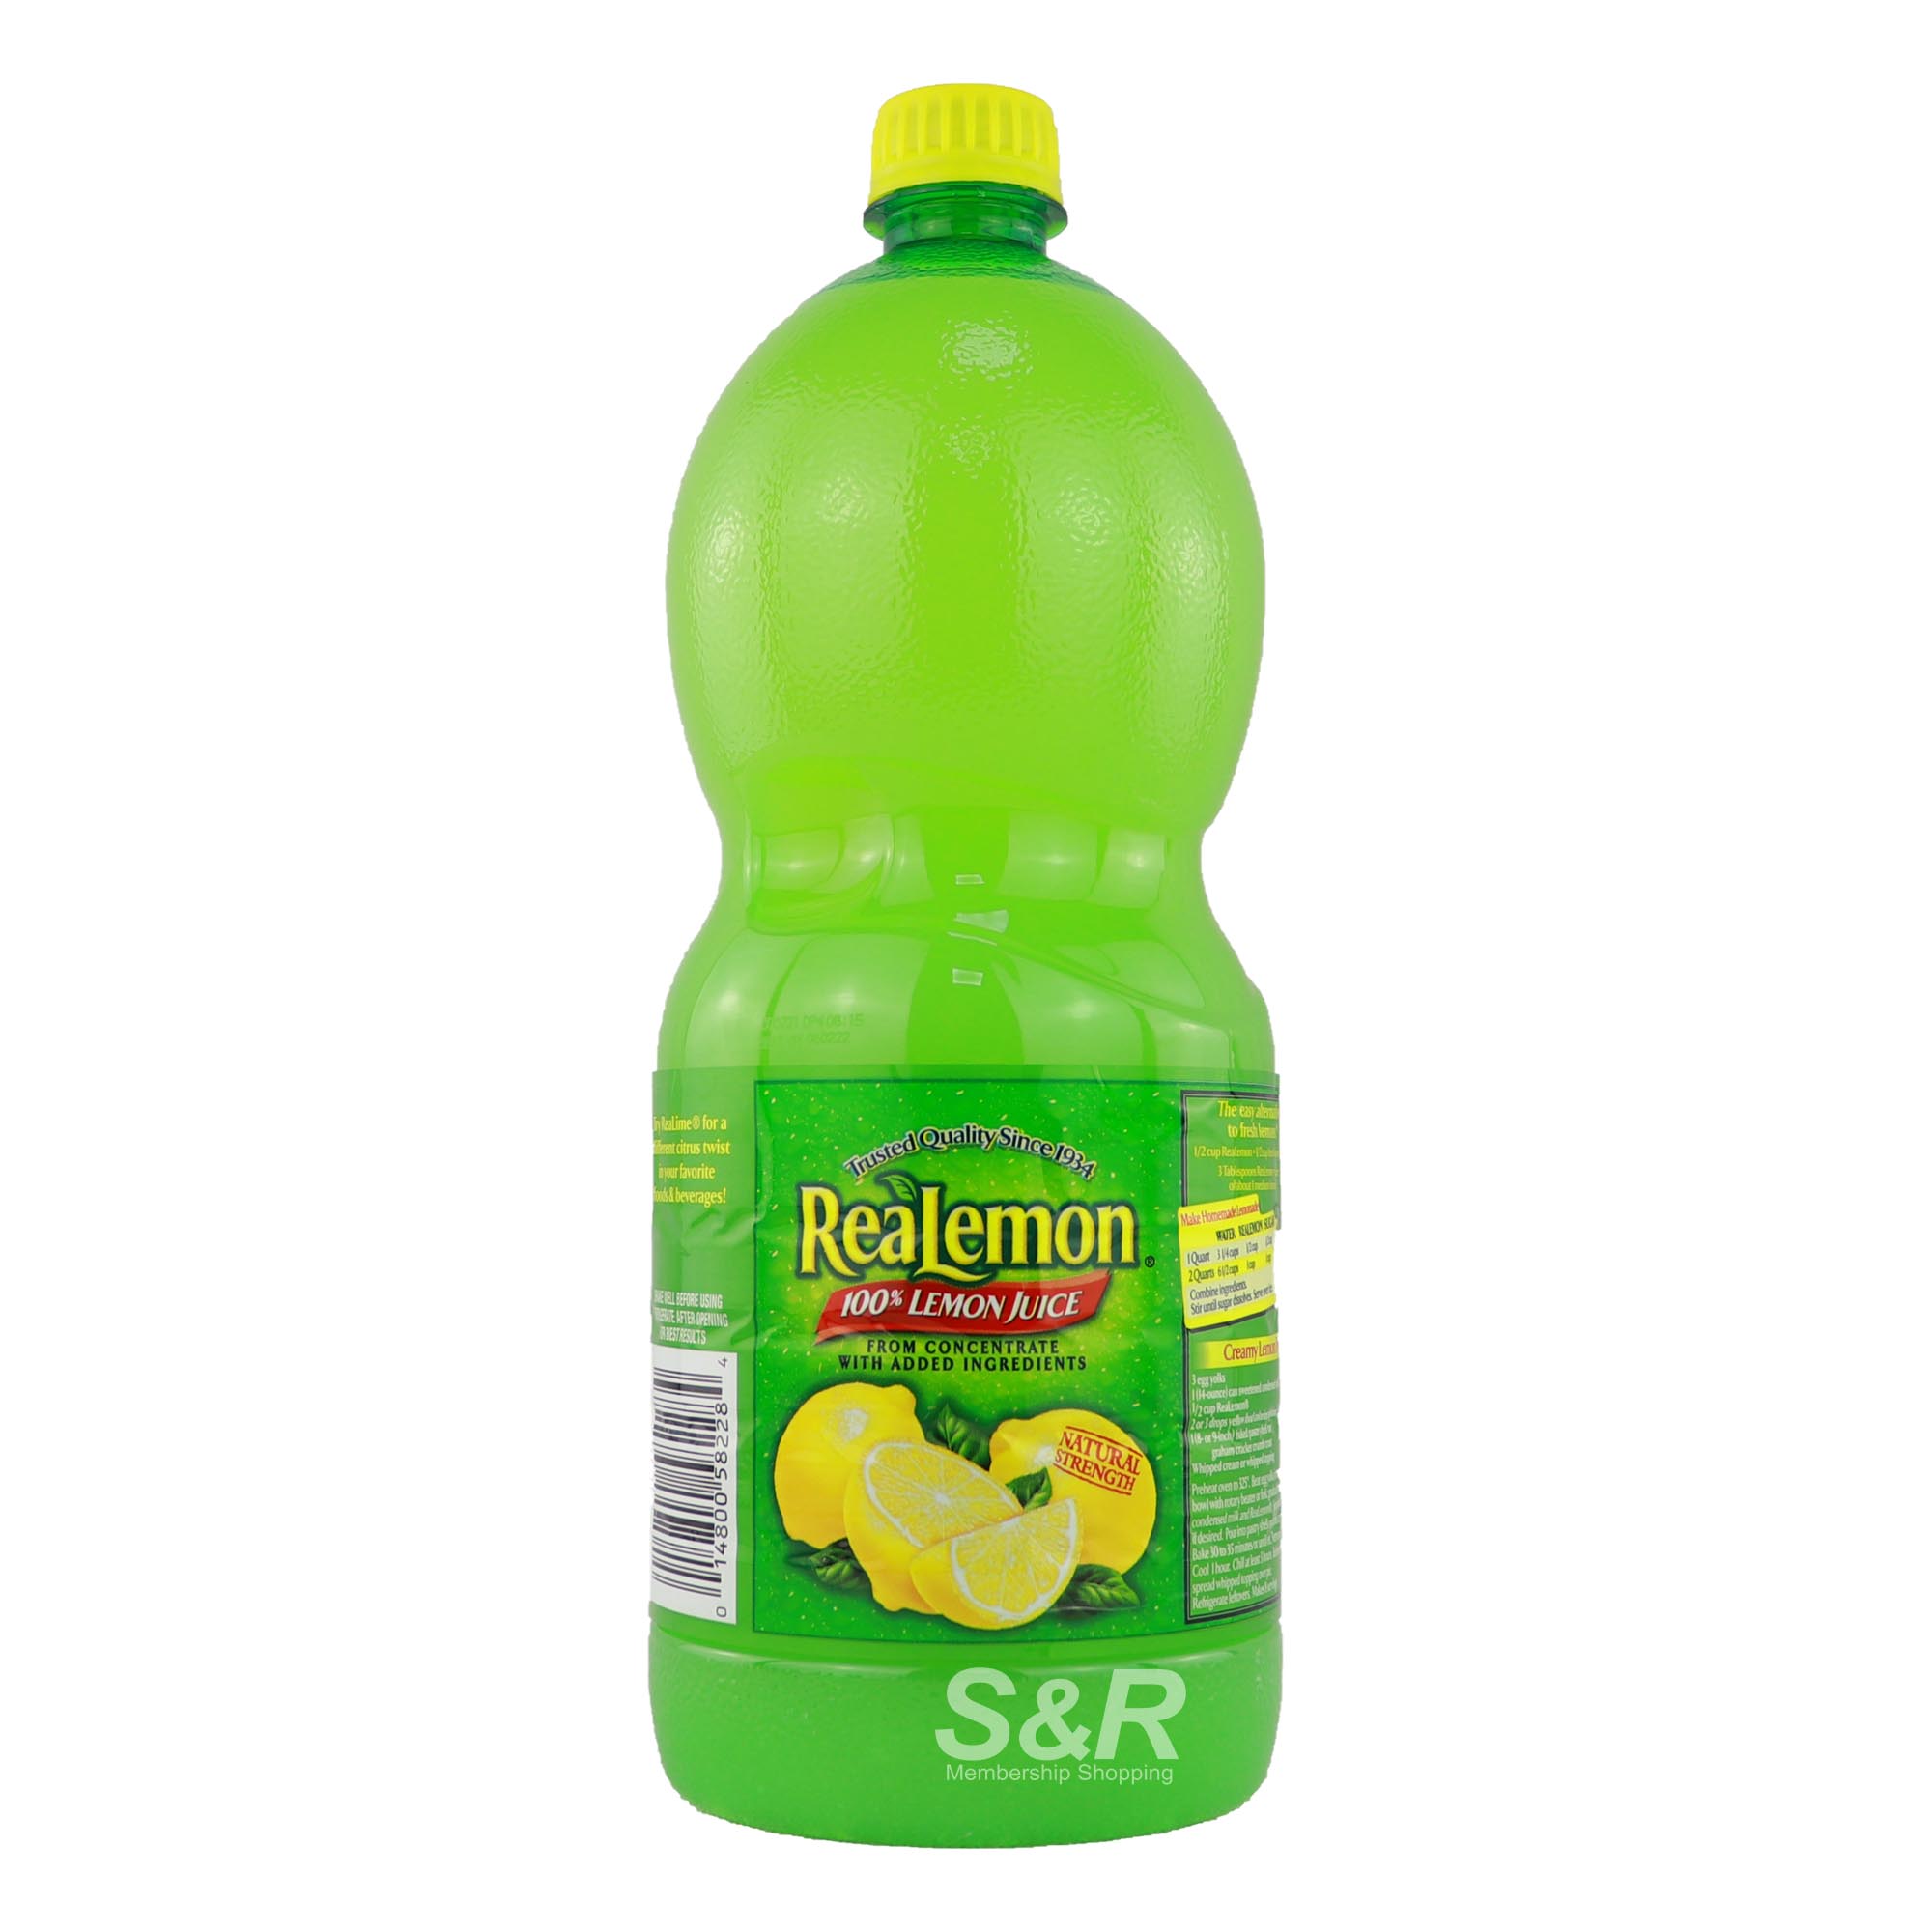 ReaLemon 100% Lemon Juice 1419mL